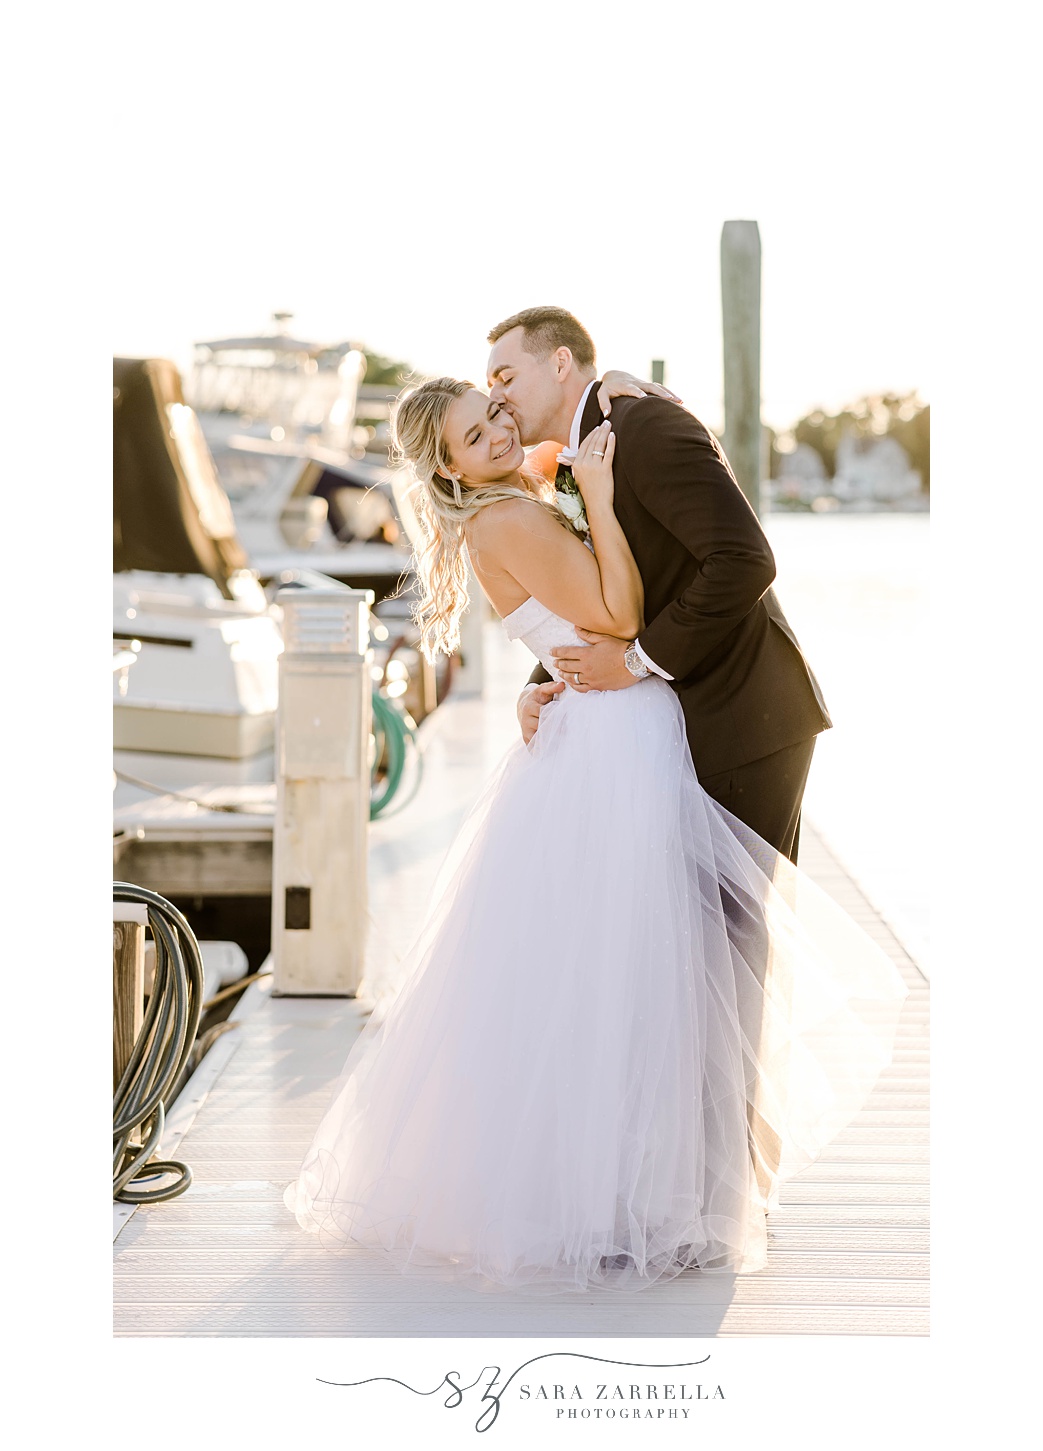 sunset portrait of groom kissing bride's cheek on dock